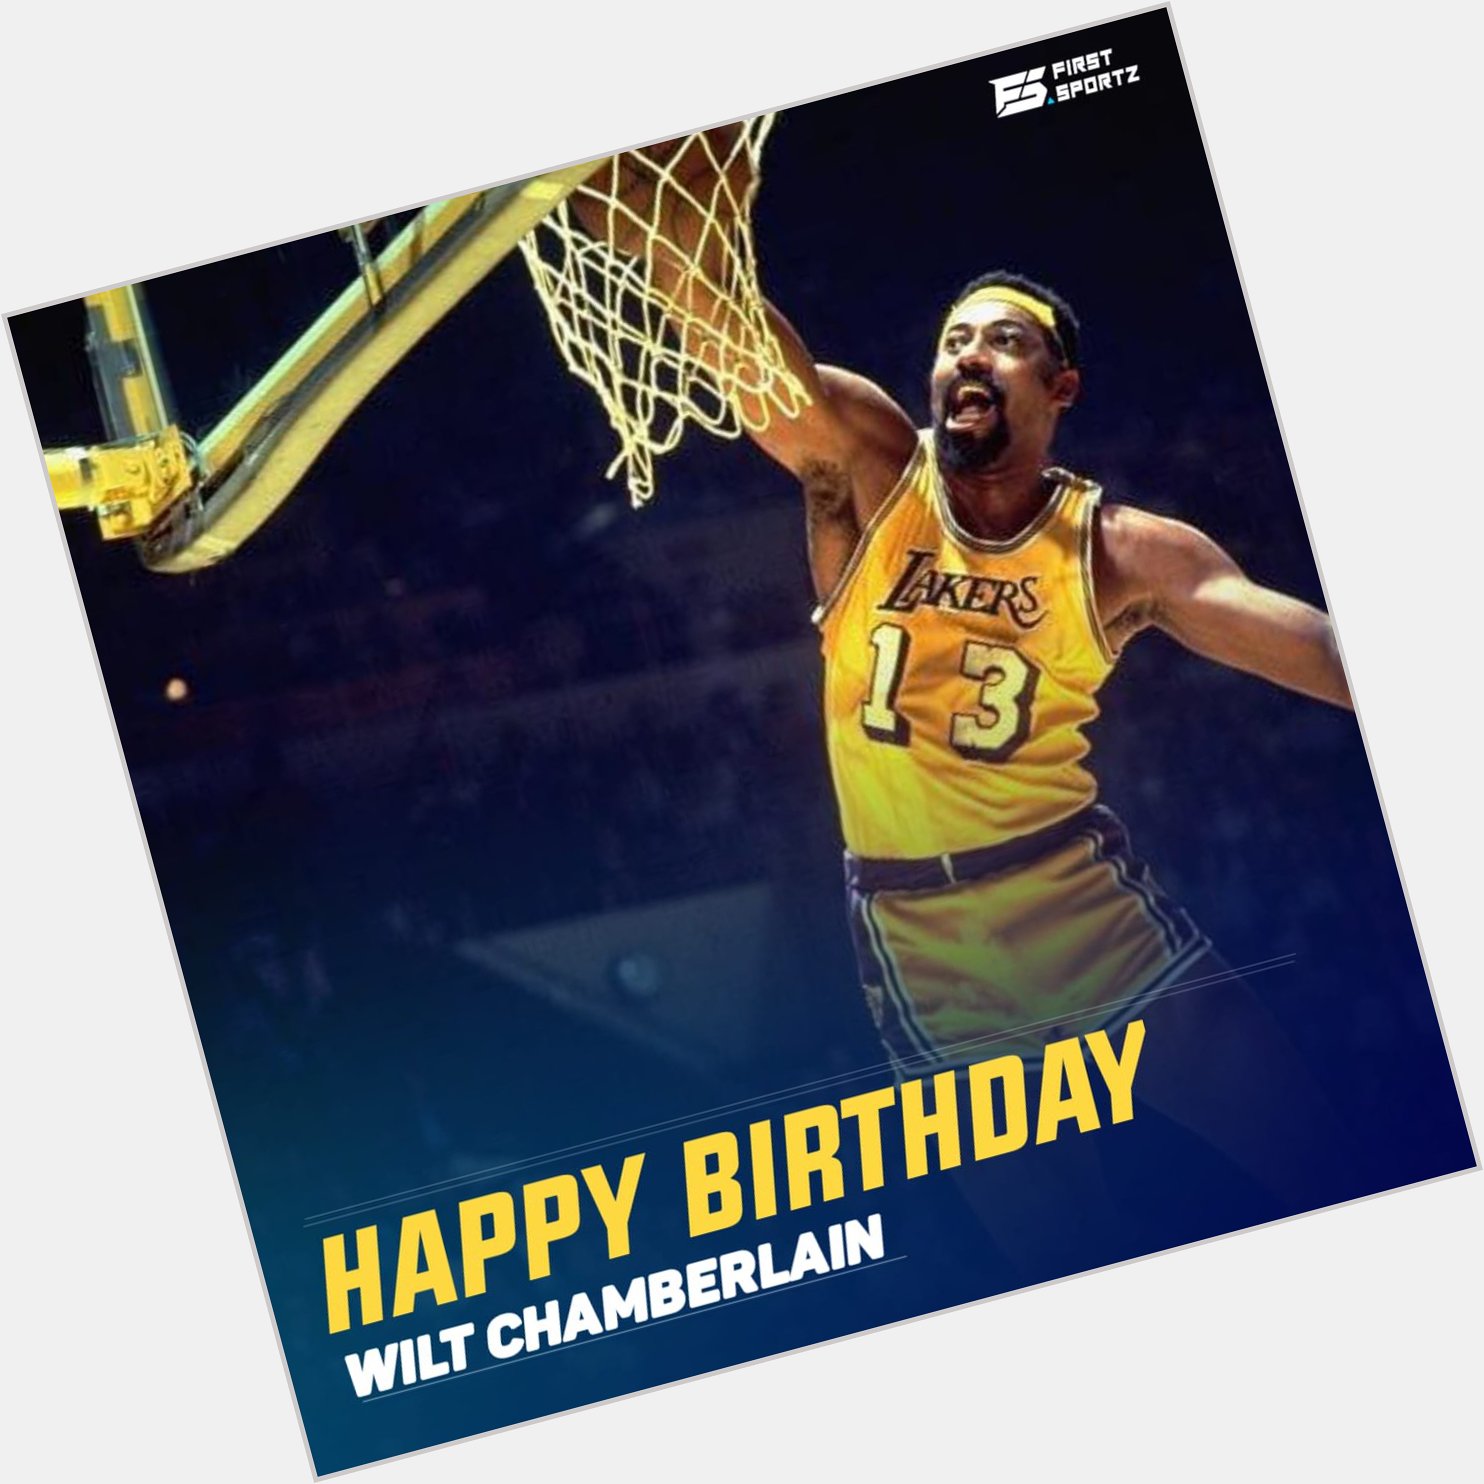 Wishing Wilt Chamberlain the legendary basketball player a very happy birthday.   